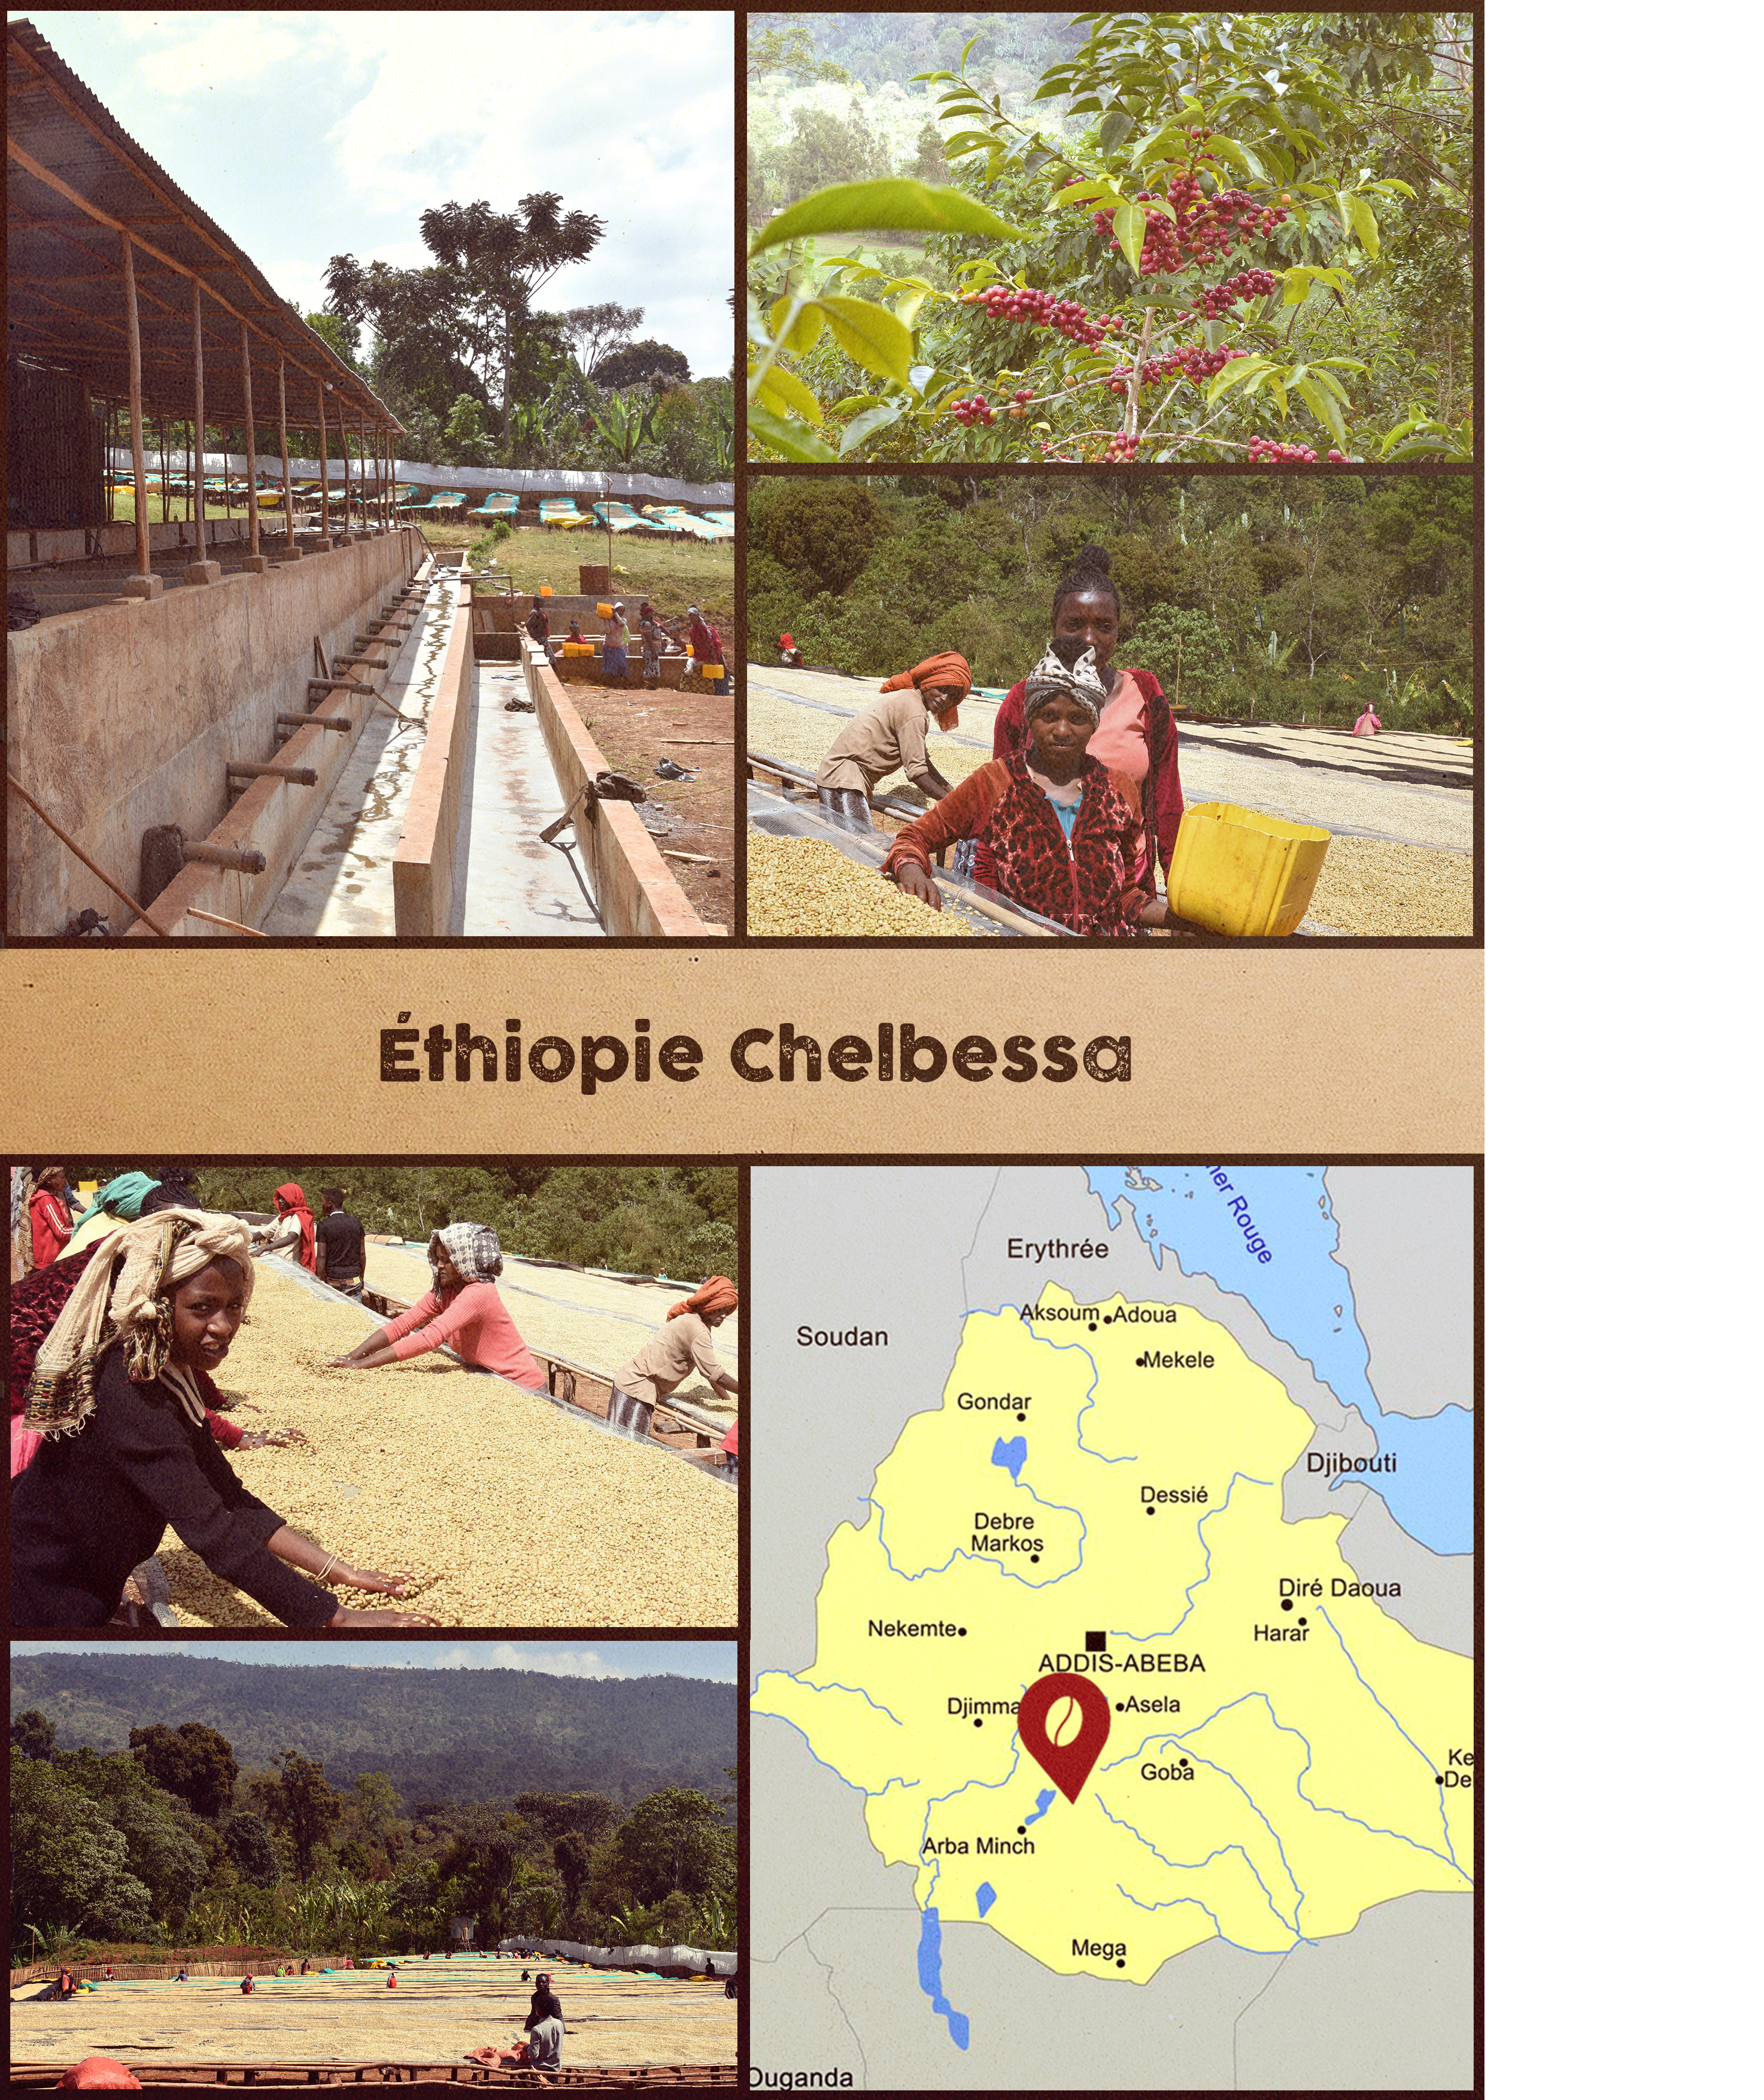 ETHIOPIE - CHELBESSA.png